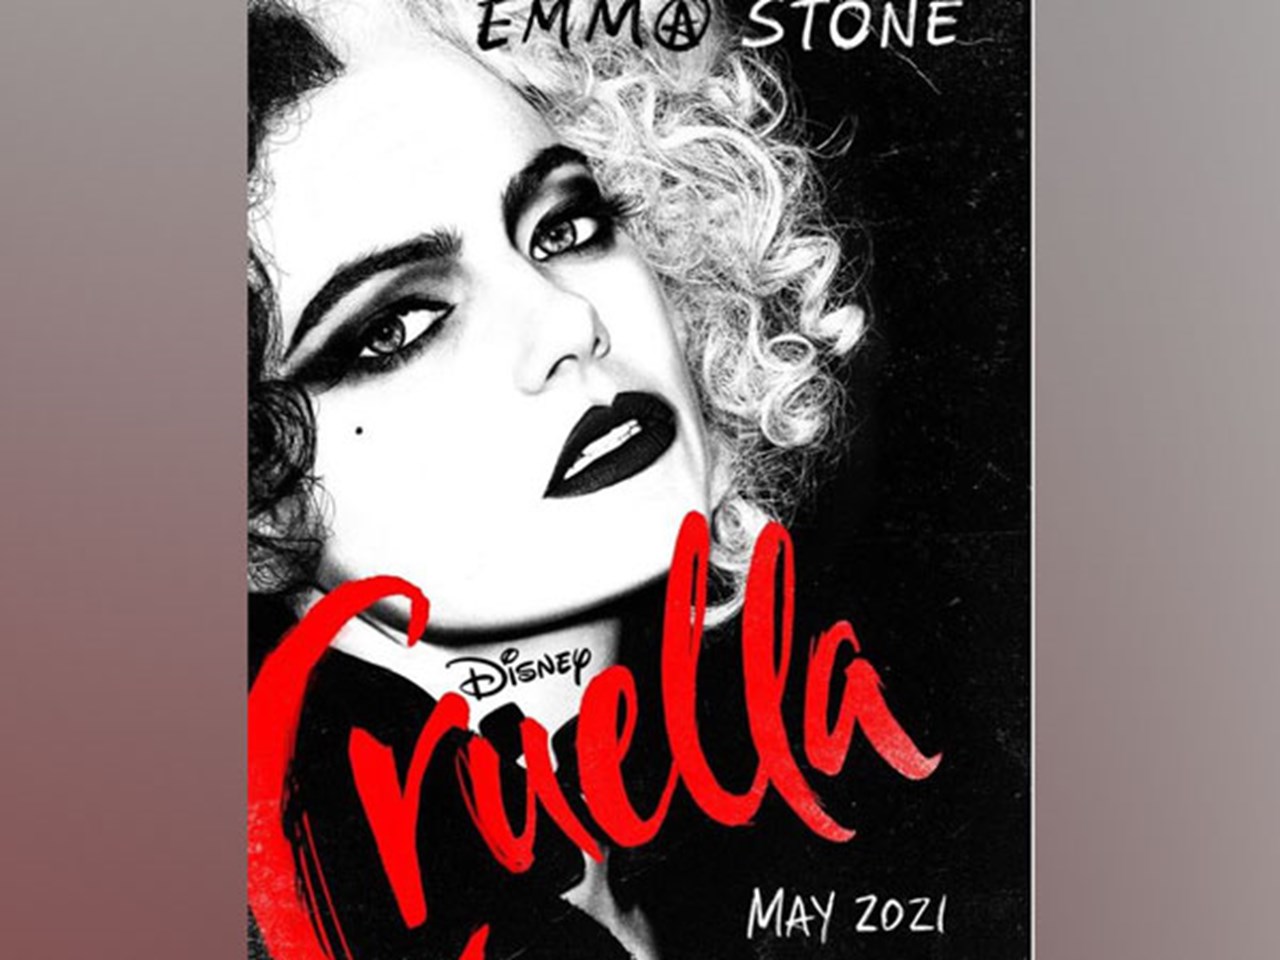 Cruella': Emma Stone's Disney villainess gets a punk-rock reimagining